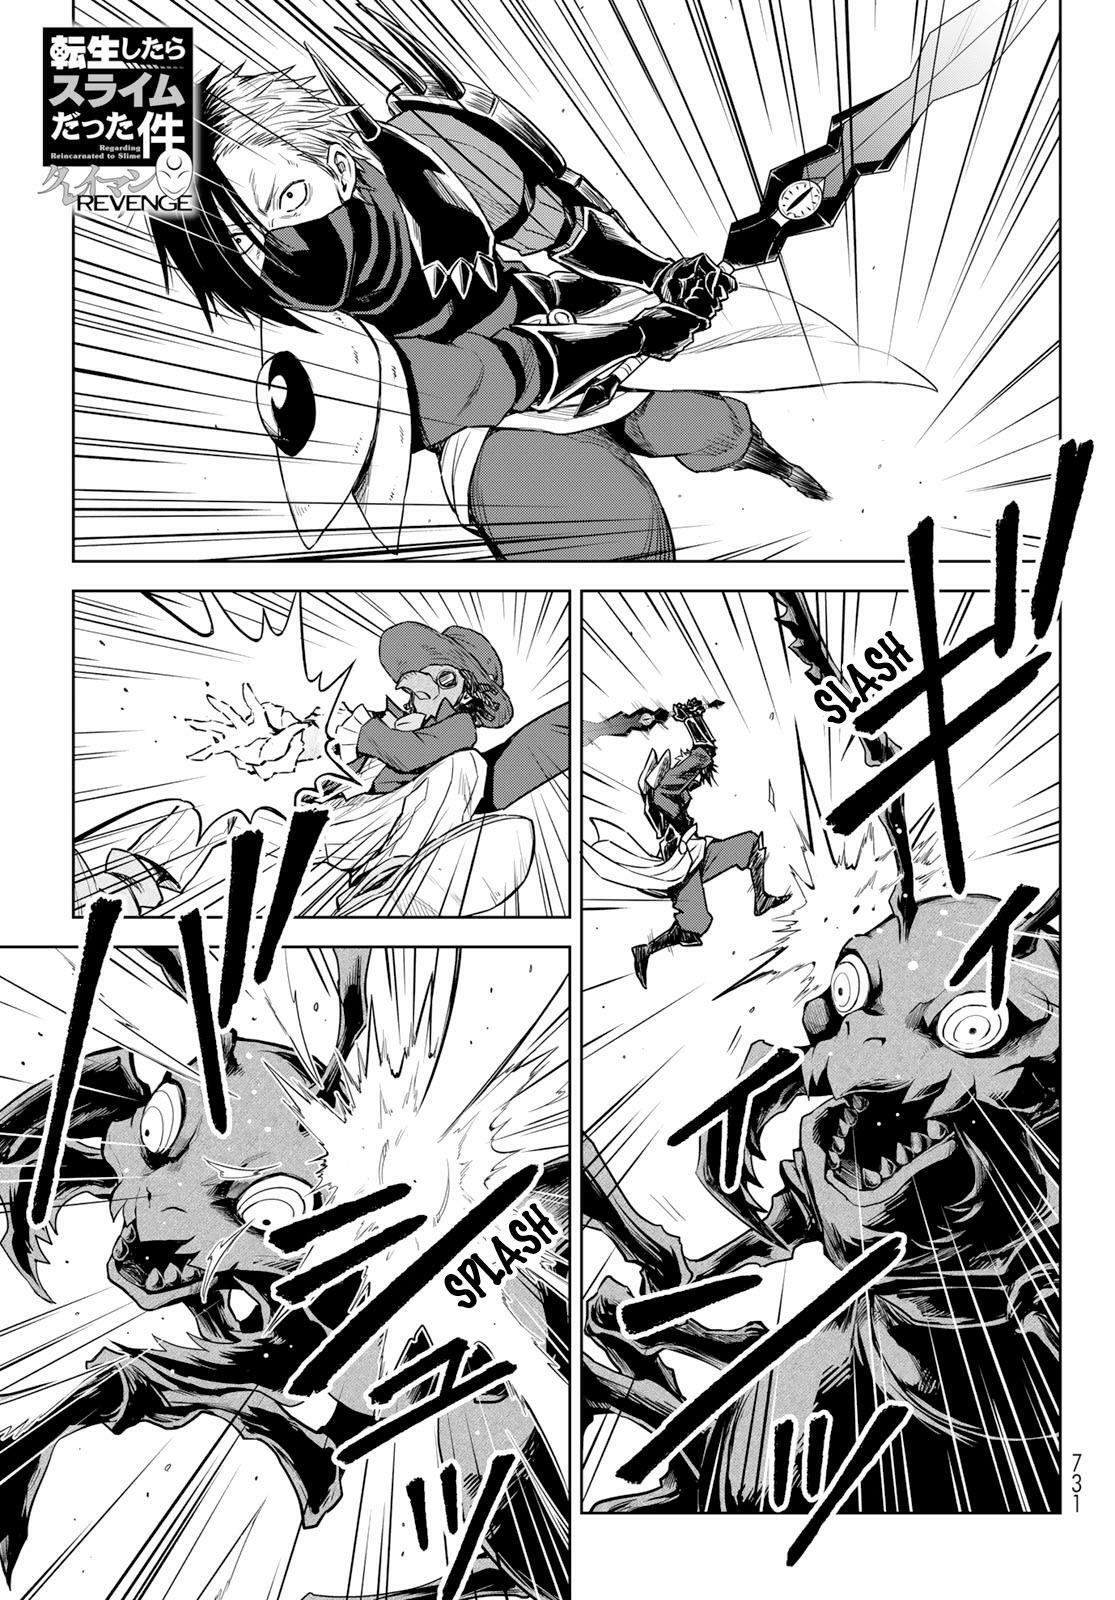 Read Tensei Shitara Slime Datta Ken: Clayman Revenge Chapter 2: Decision on  Mangakakalot